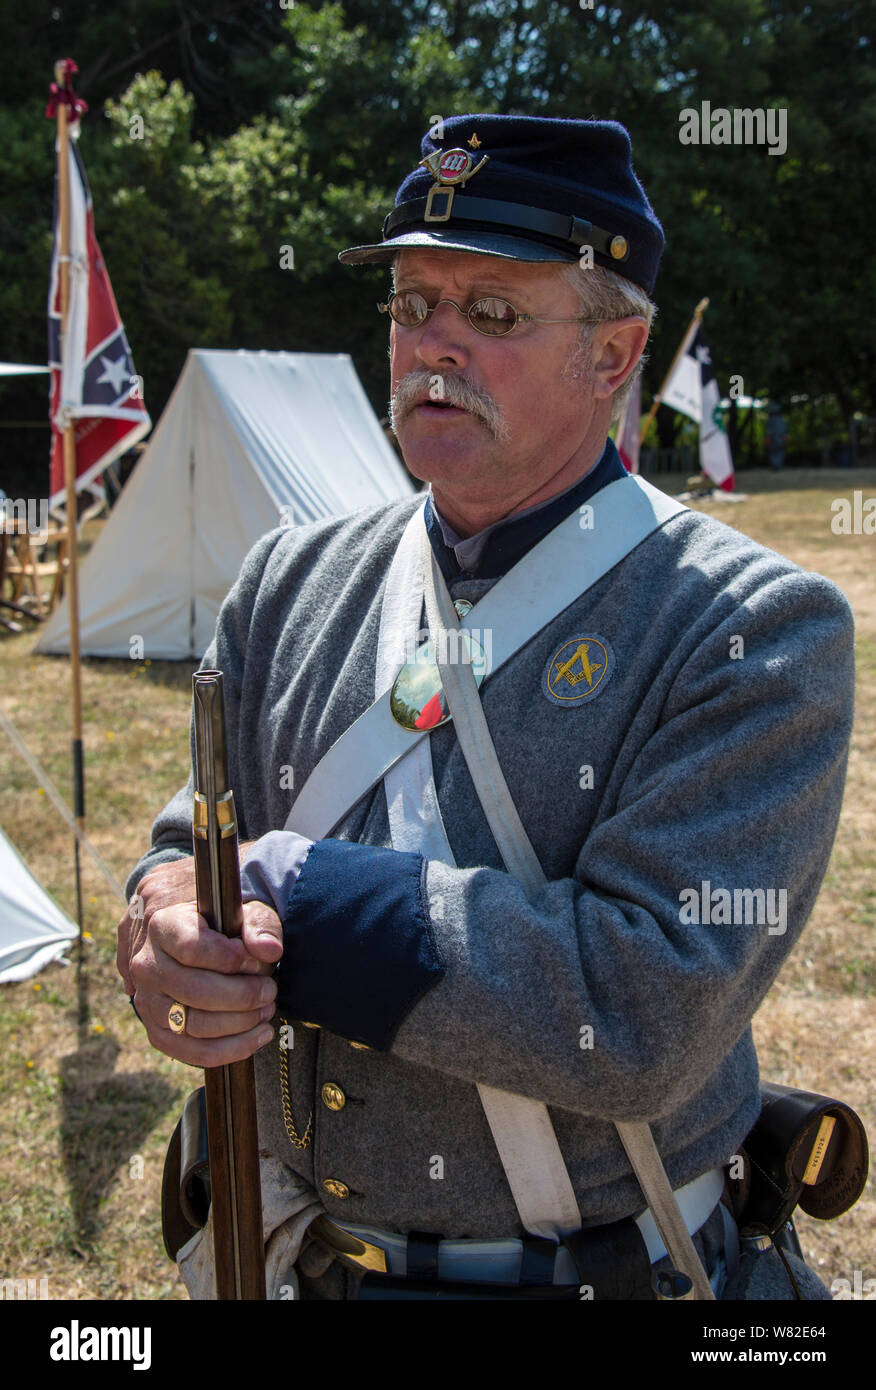 Duncan Mills, Calif - July 14, 2012: Man in Military Uniform during Civil War Reenactment Stock Photo